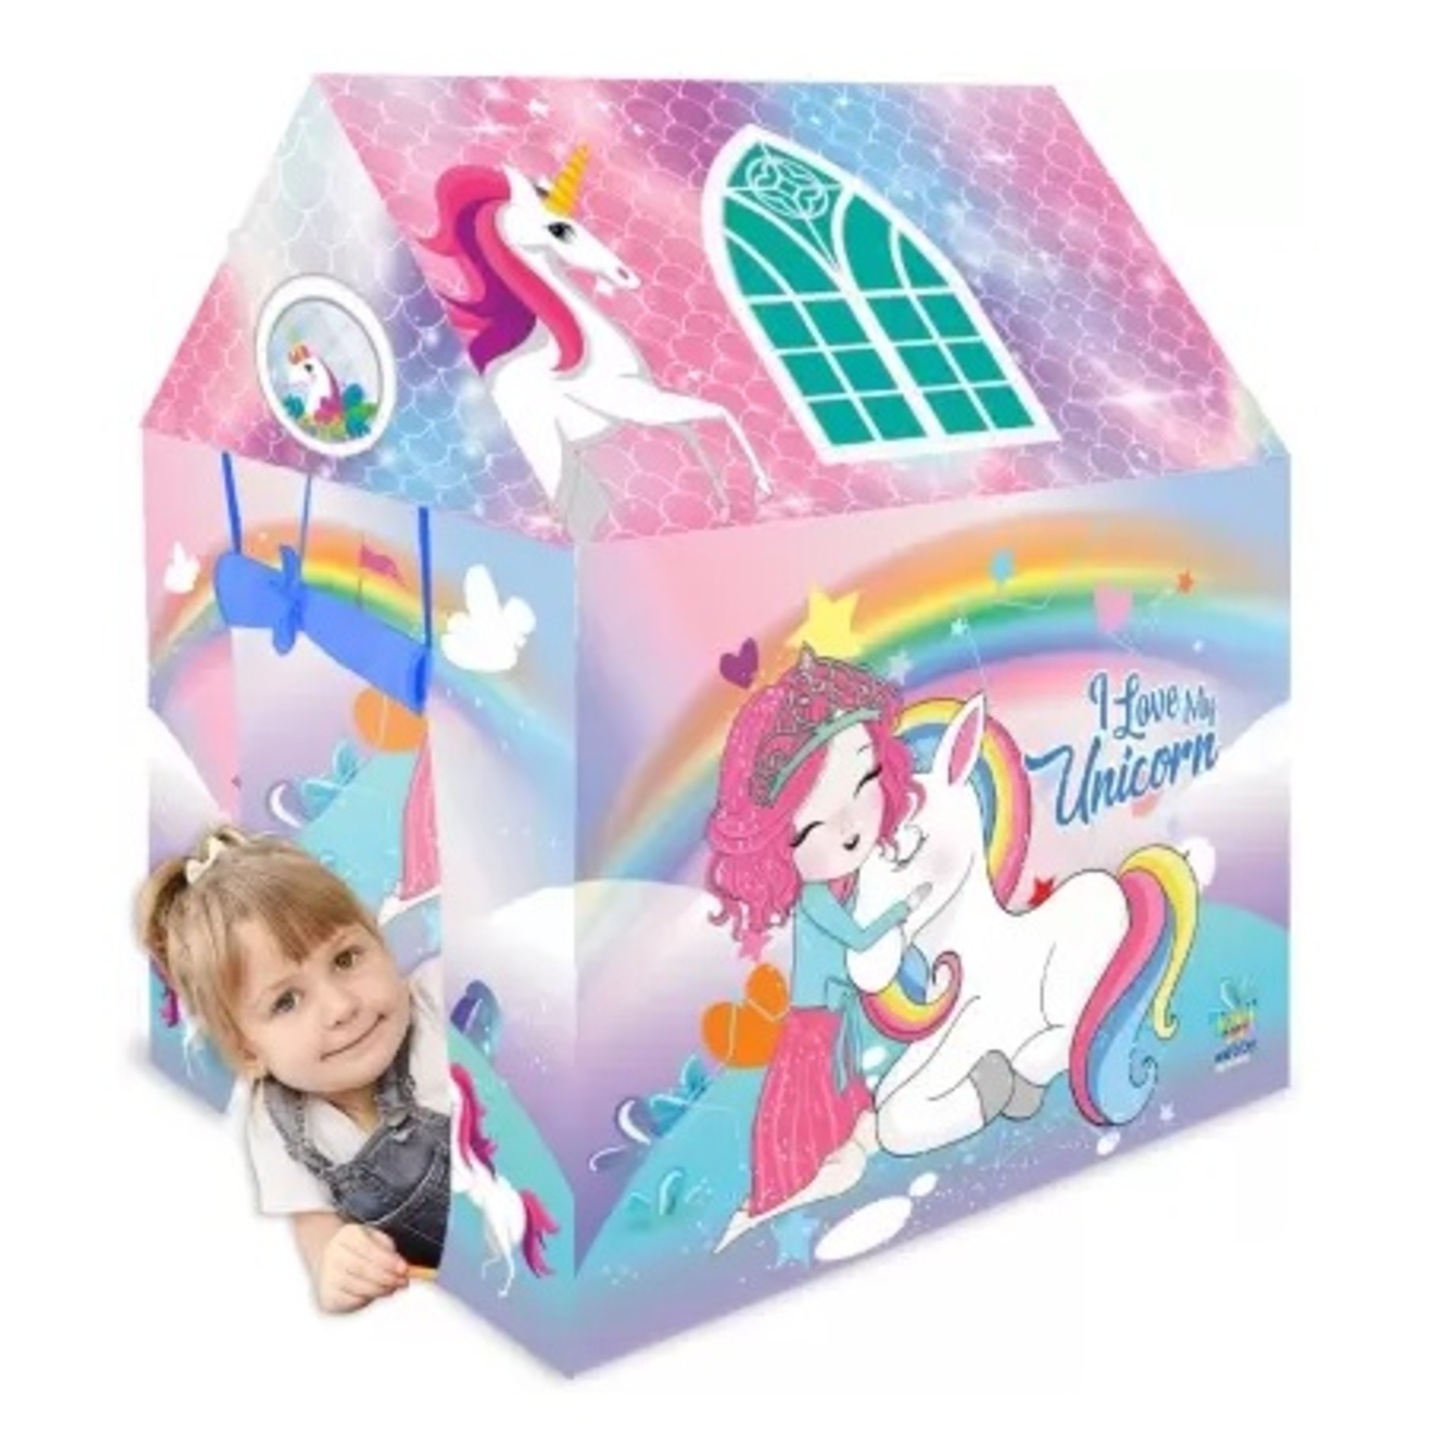 Princes and Unicorn Play Tent for Kids 150 cm x 91 cm x 68 cm